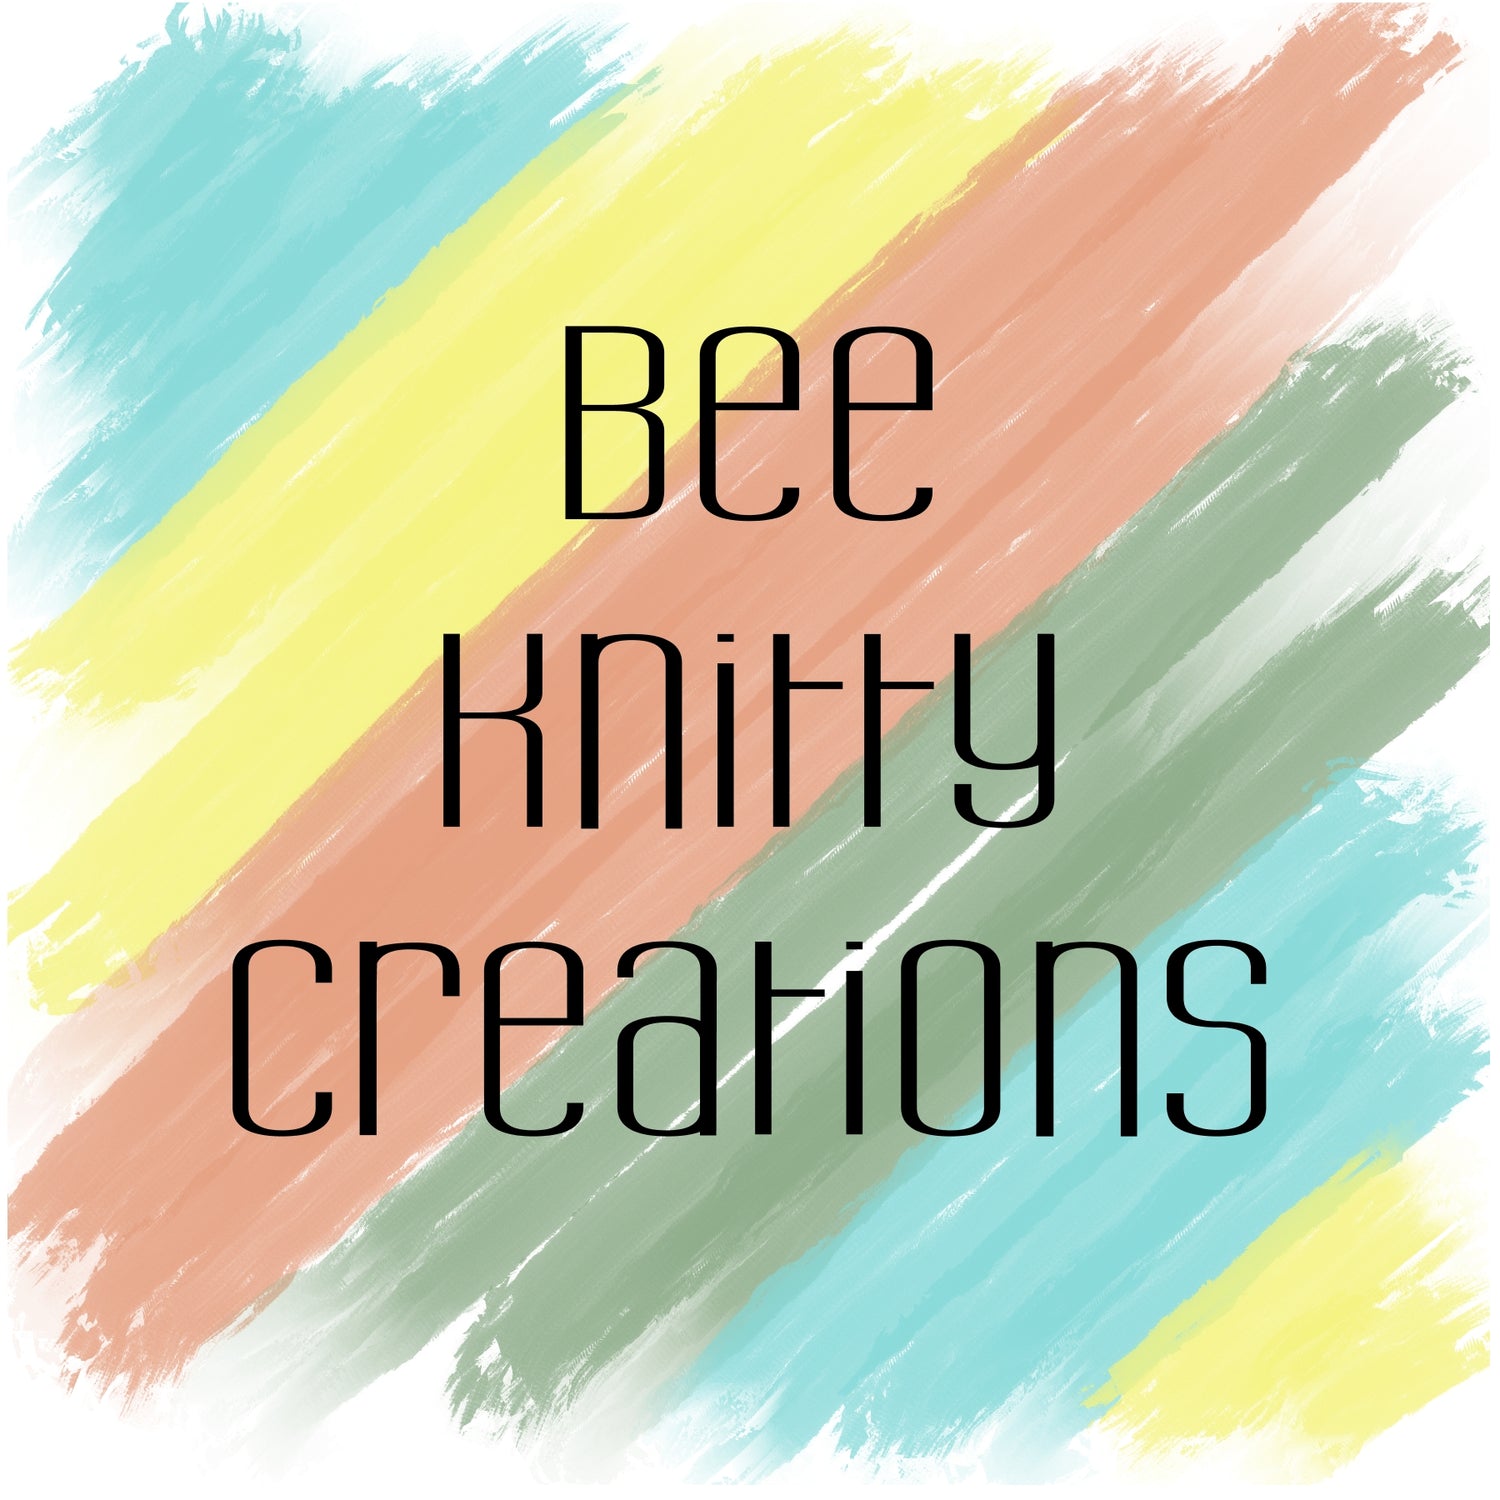 Bee Knitty Creations